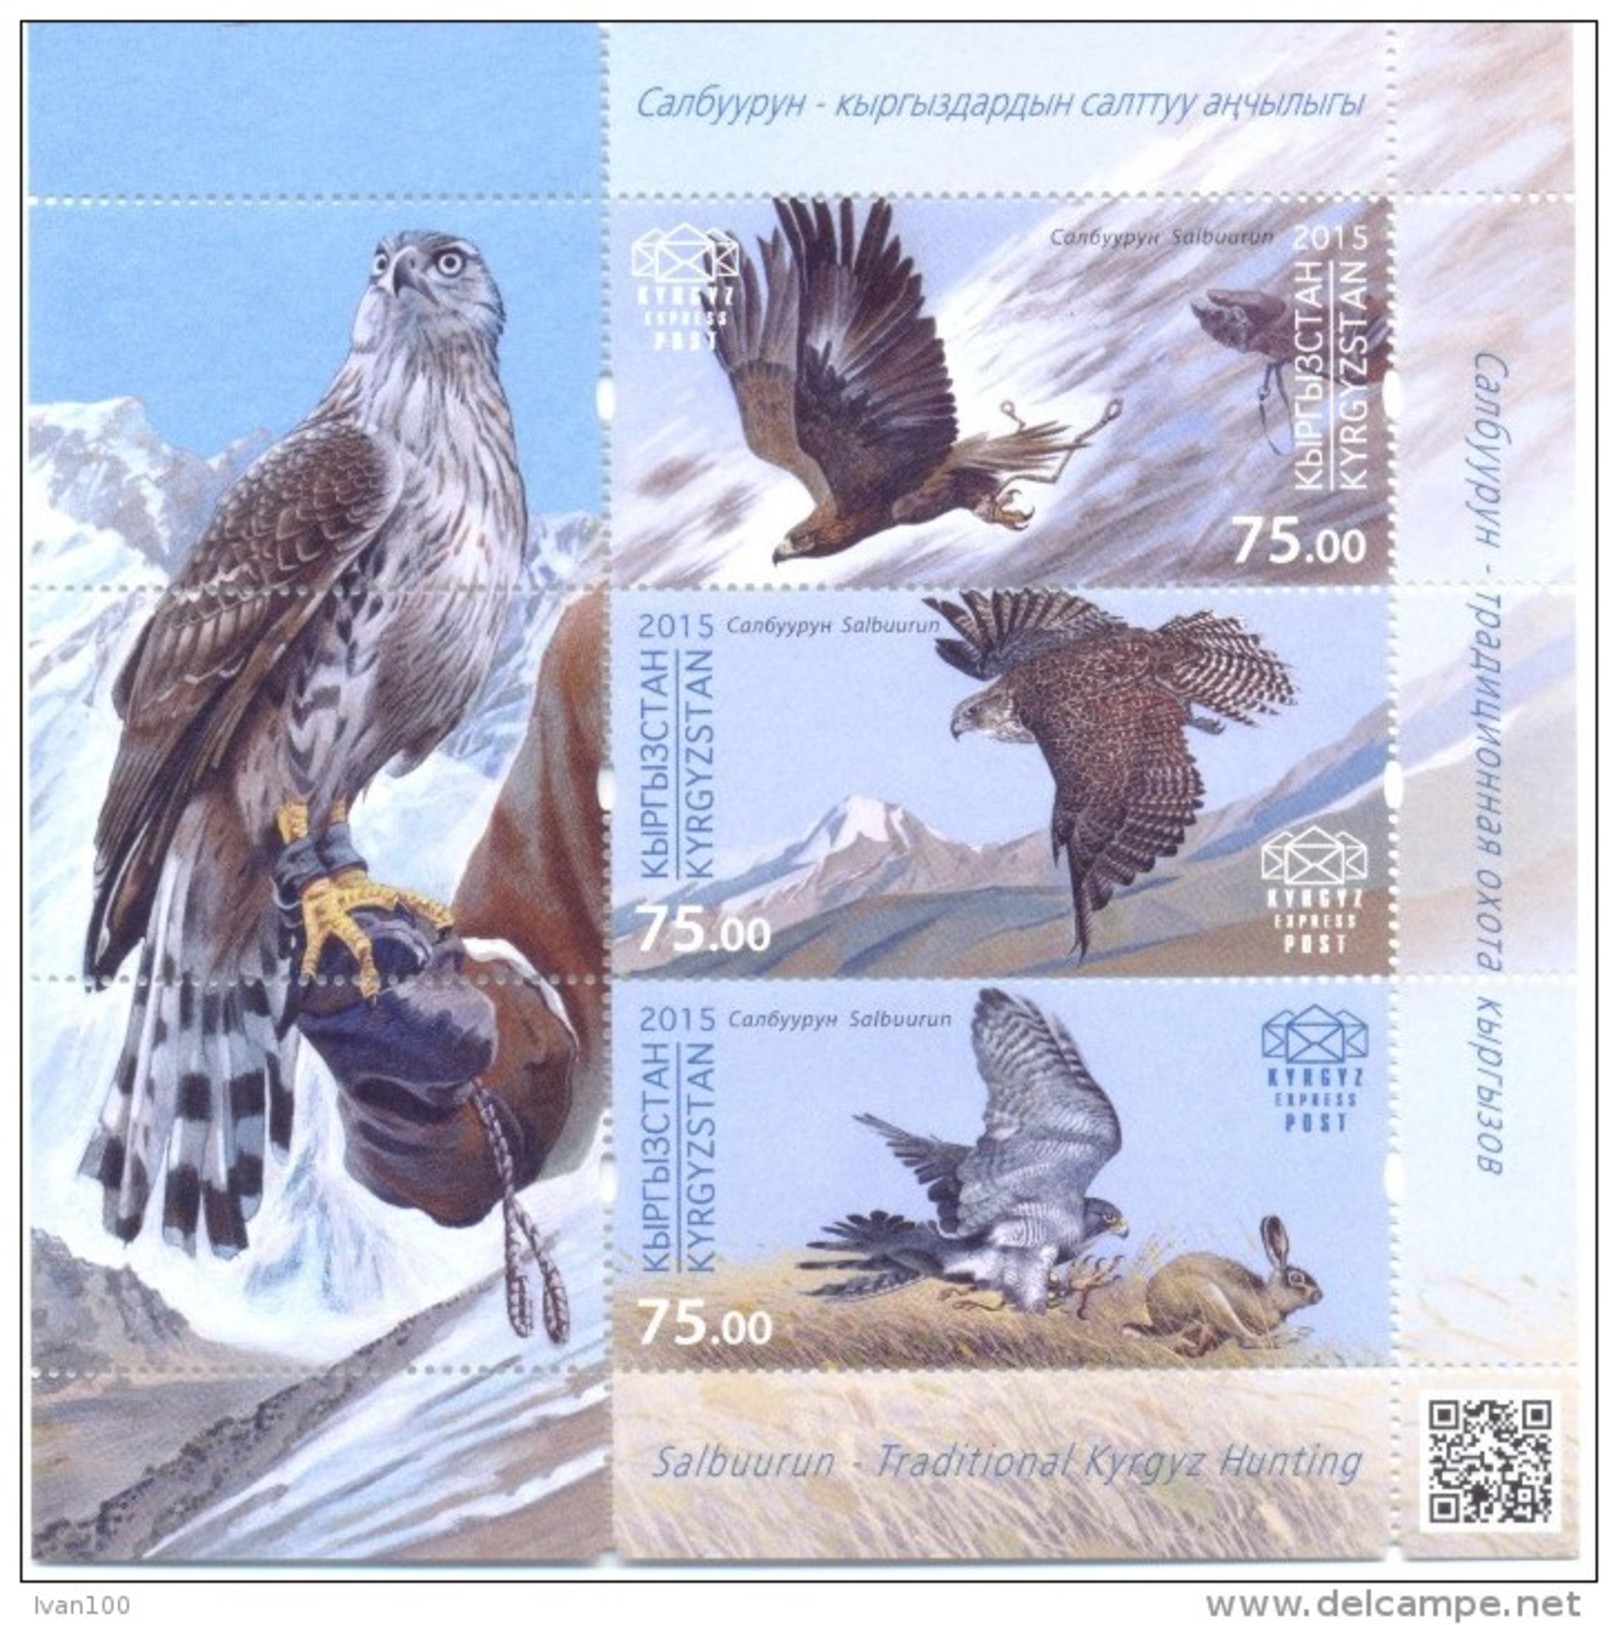 2015. Kyrgyzstan, Birds Of Prey, Salbuurun - Traditional Kyrgyz Hunting, S/s, Mint/** - Kirgisistan